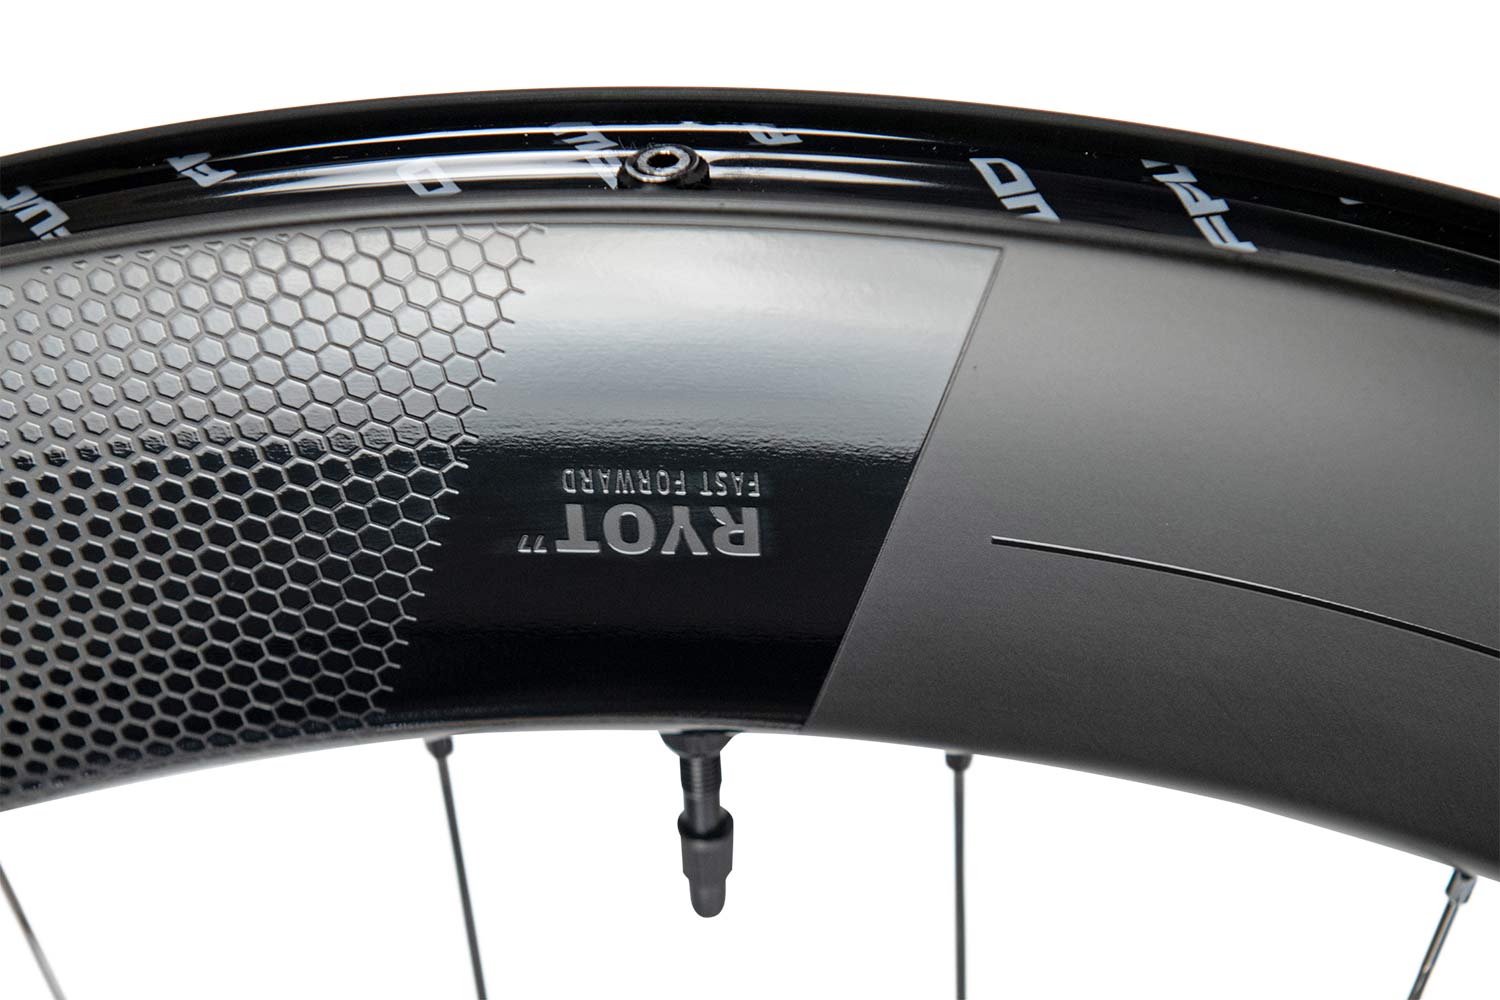 FFWD RYOT77 deep aero carbon tubeless disc brake TT time trial triathlon crit road wheels, detail